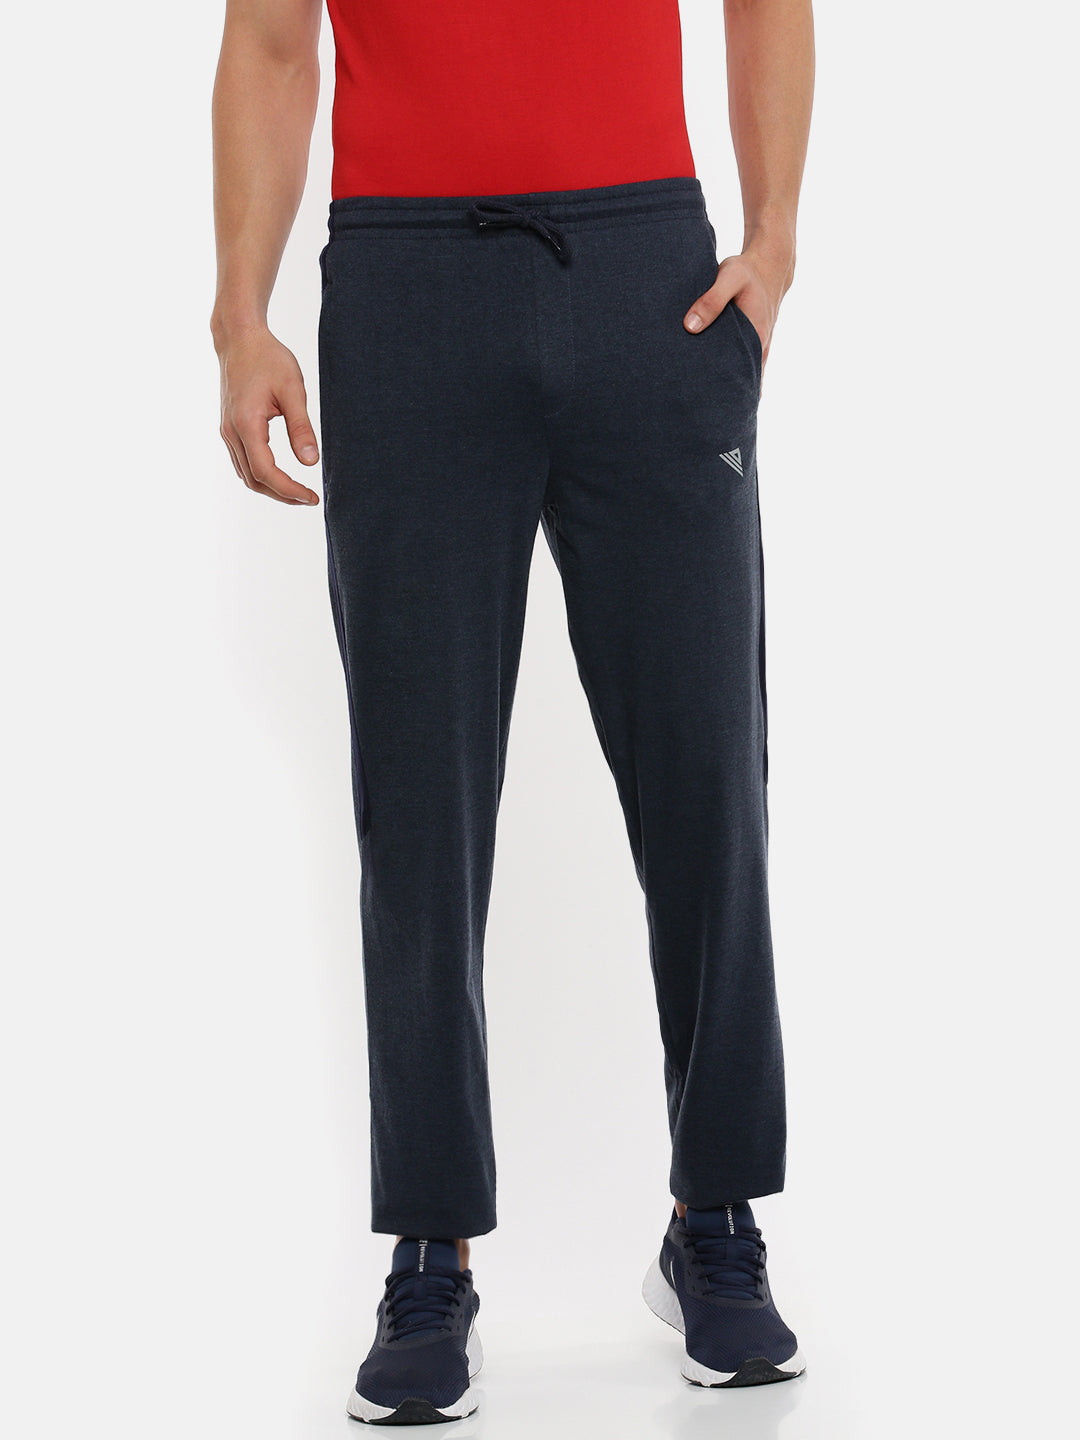 Super Combed Cotton Side Sew Panel Smart Fit  Zipper Pocket Track Pant